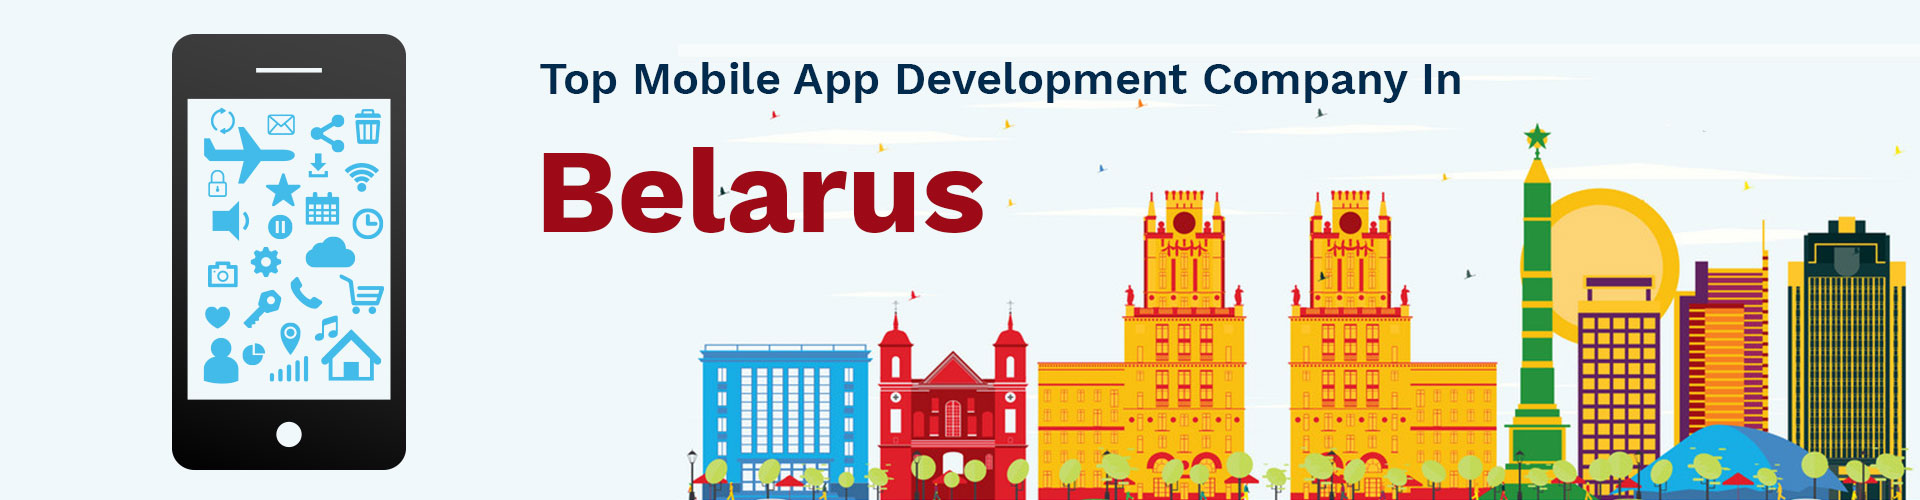 mobile app development company belarus